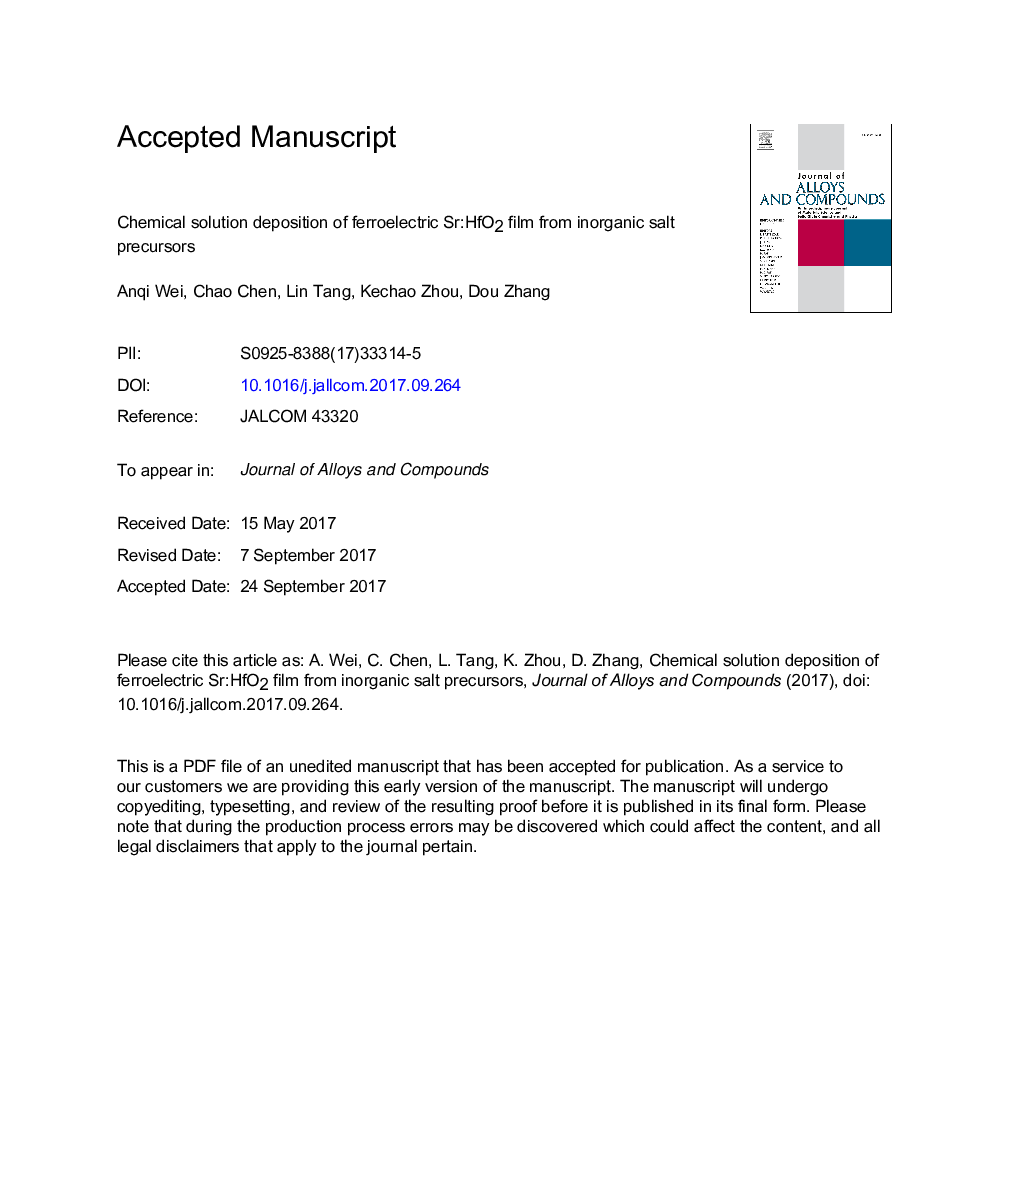 Chemical solution deposition of ferroelectric Sr:HfO2 film from inorganic salt precursors